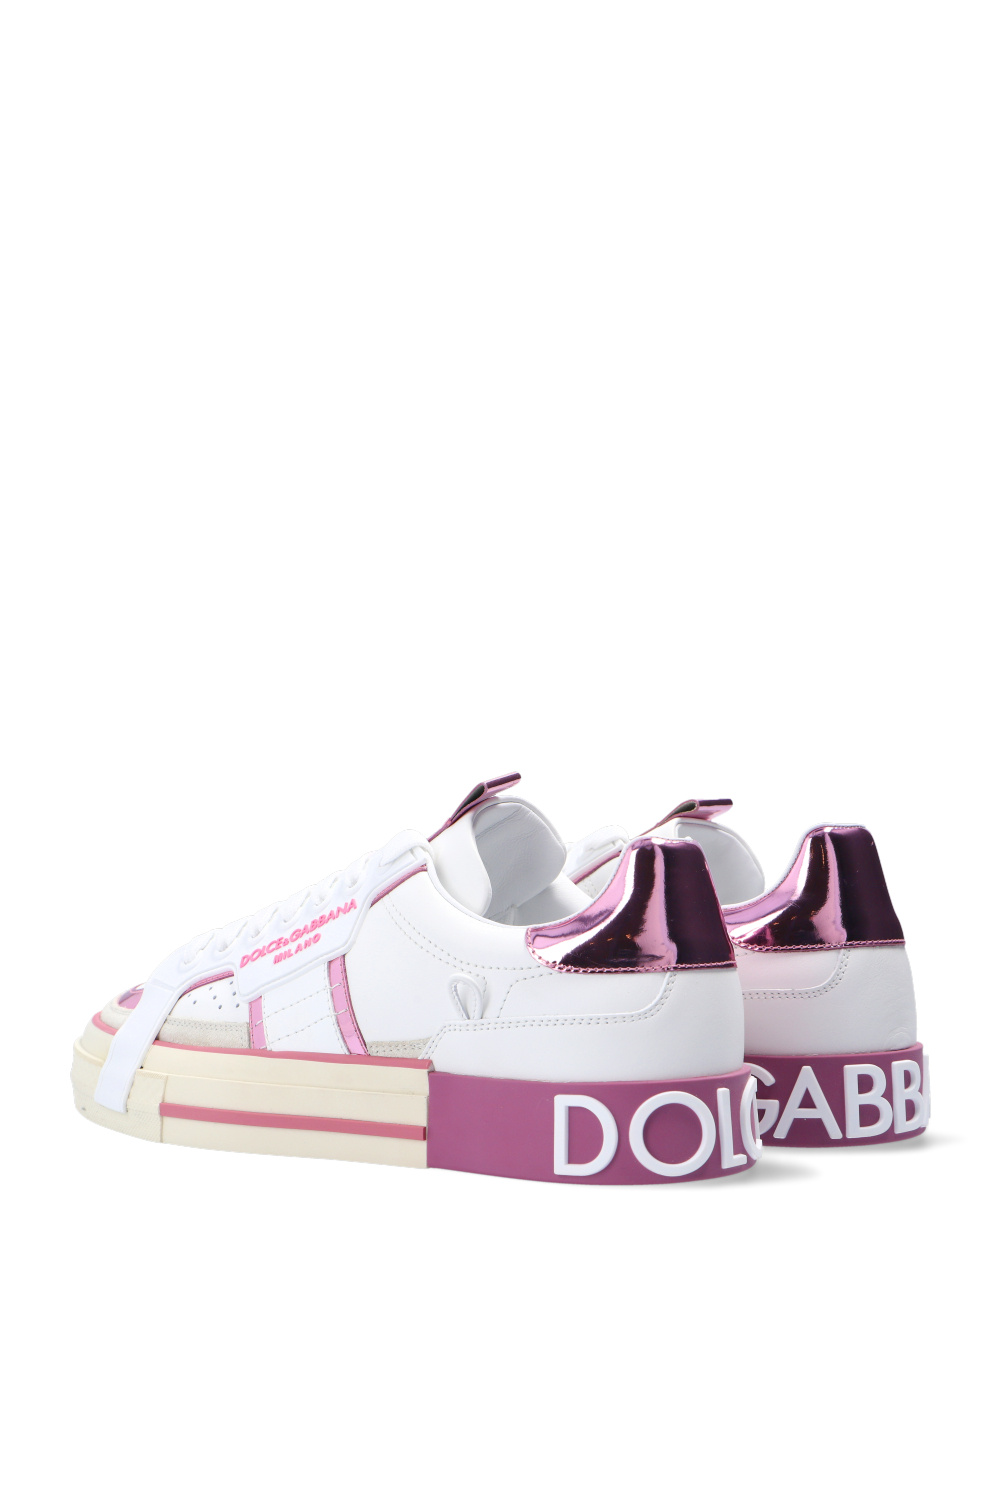 Dolce & Gabbana Kastiges Sakko mit Leo-Print Sneakers with logo